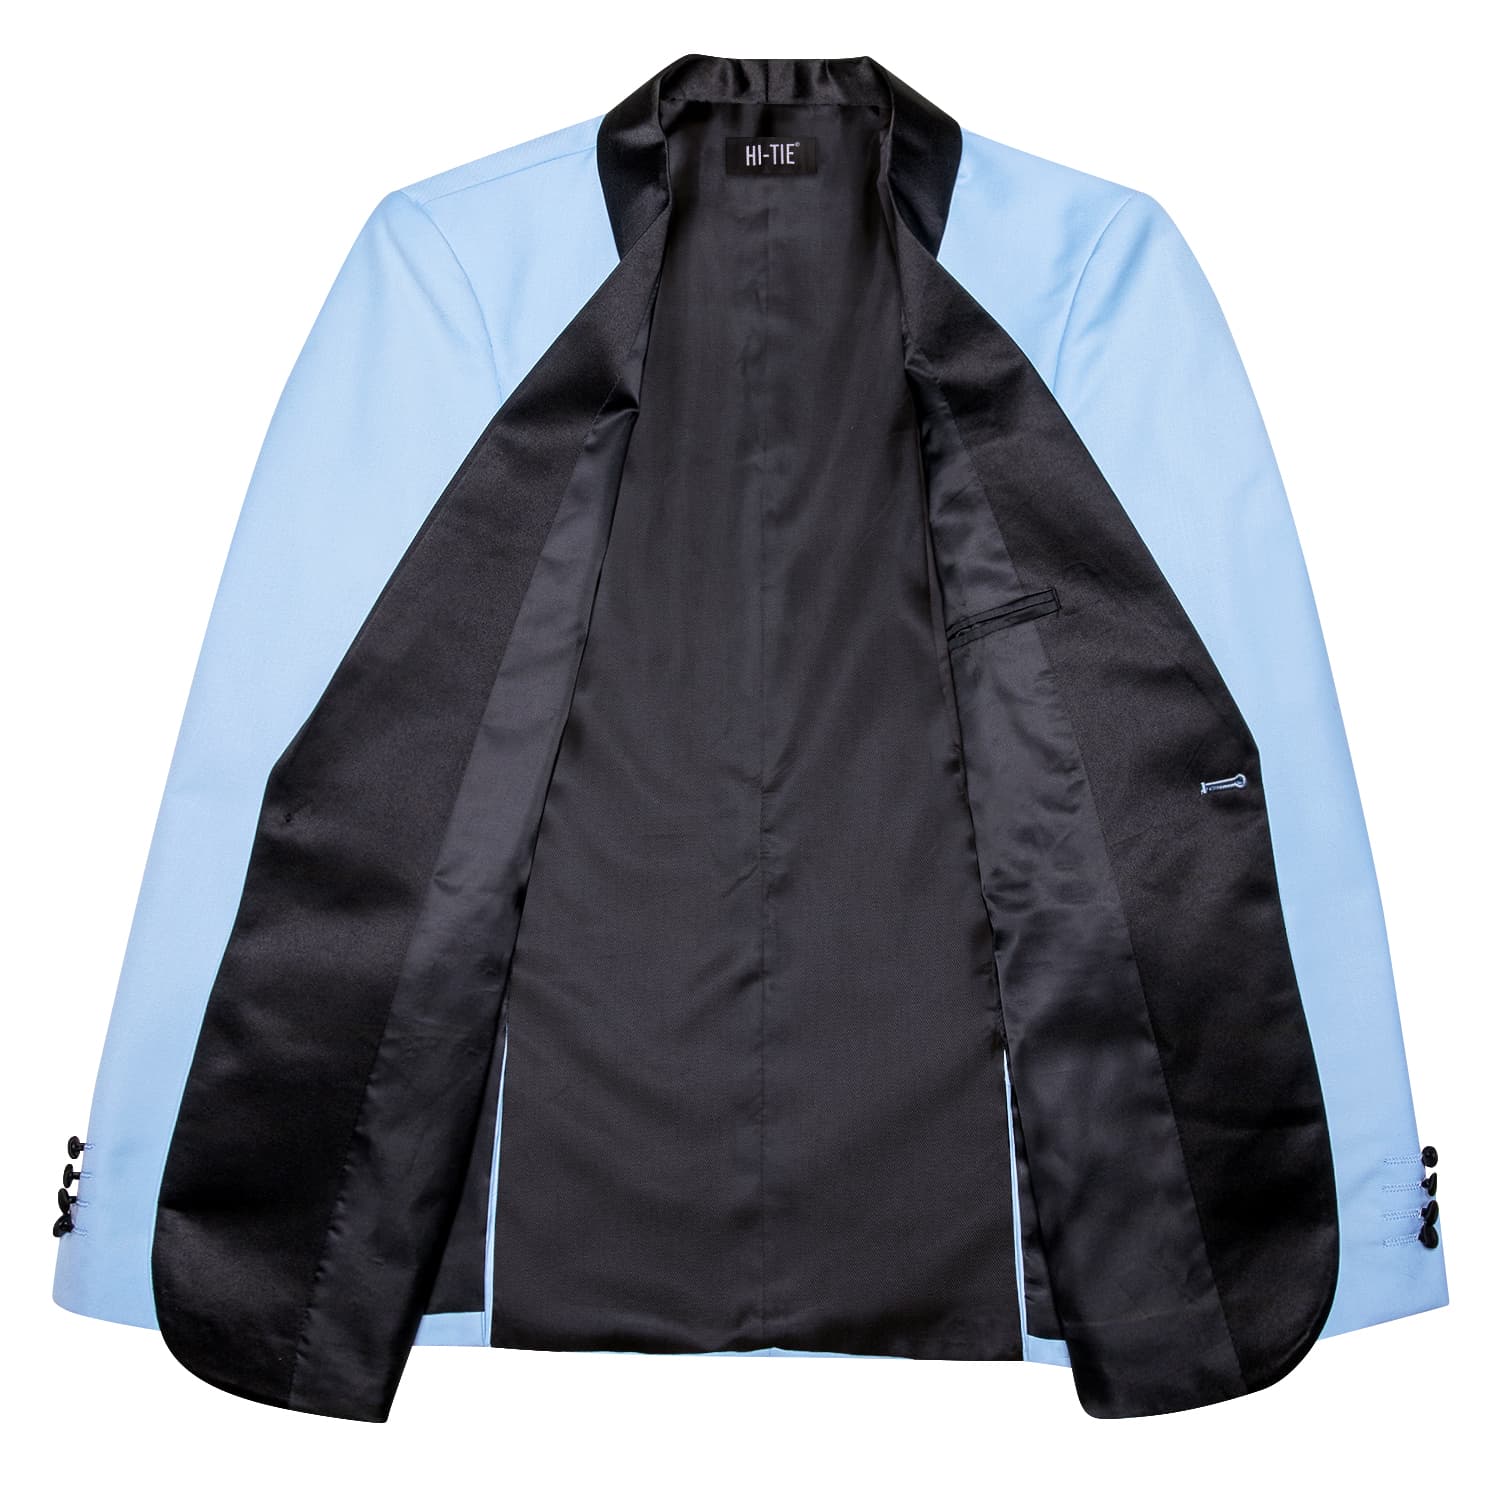 Black Shawl Collar Sky Blue Solid Blazer Bowtie Suit Set